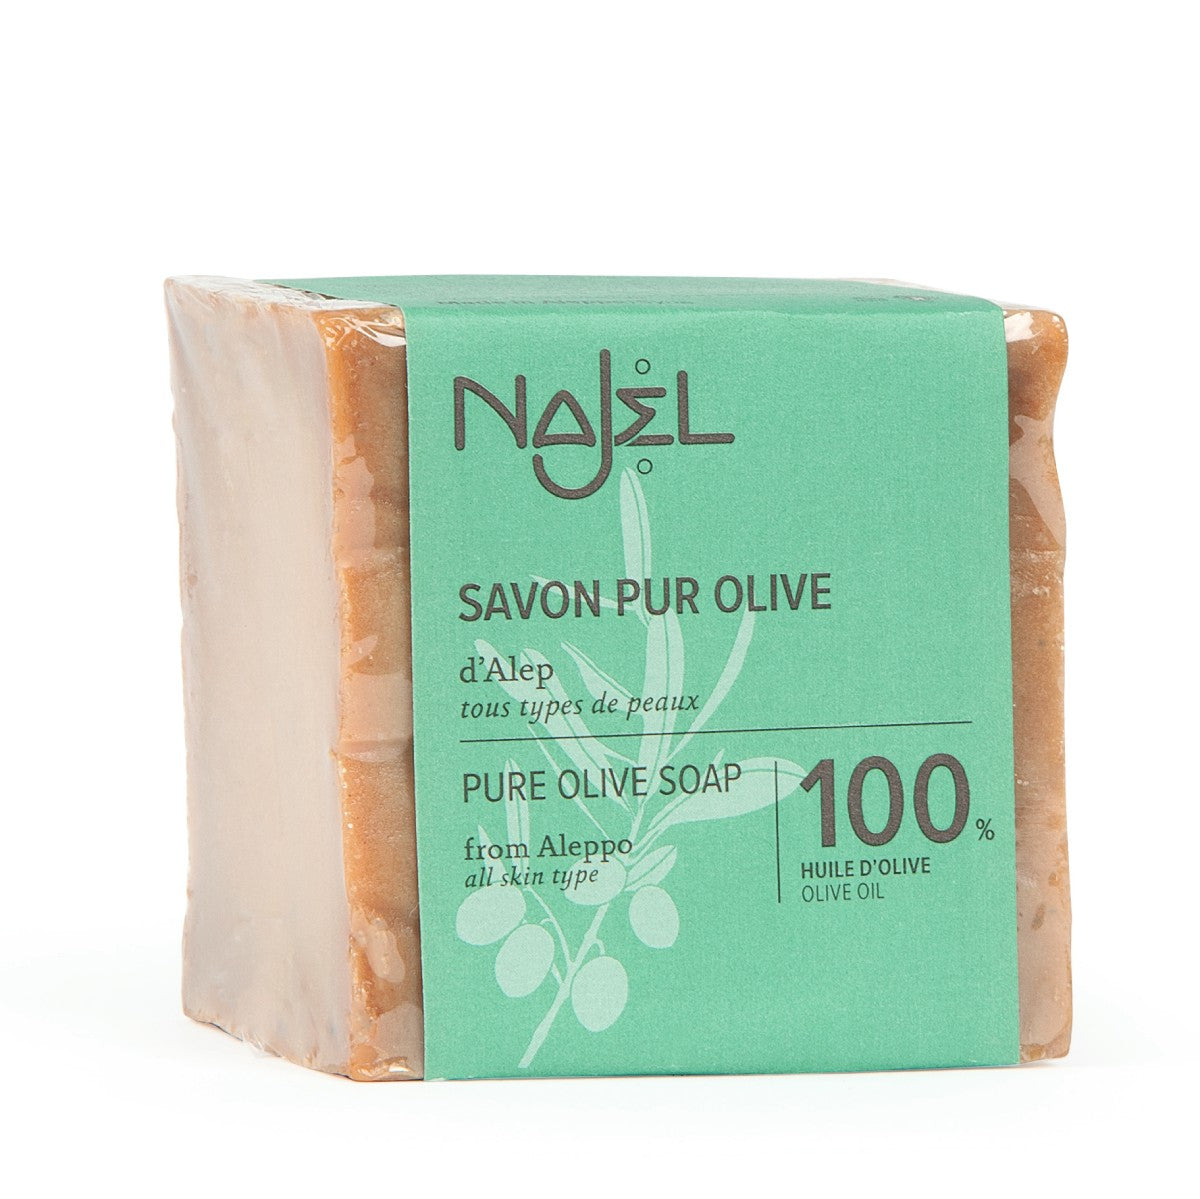 NAJEL Organic Skincare - Aleppo Pure Olive Soap, 100% Olive Oil, 200g, Organic, Vegan